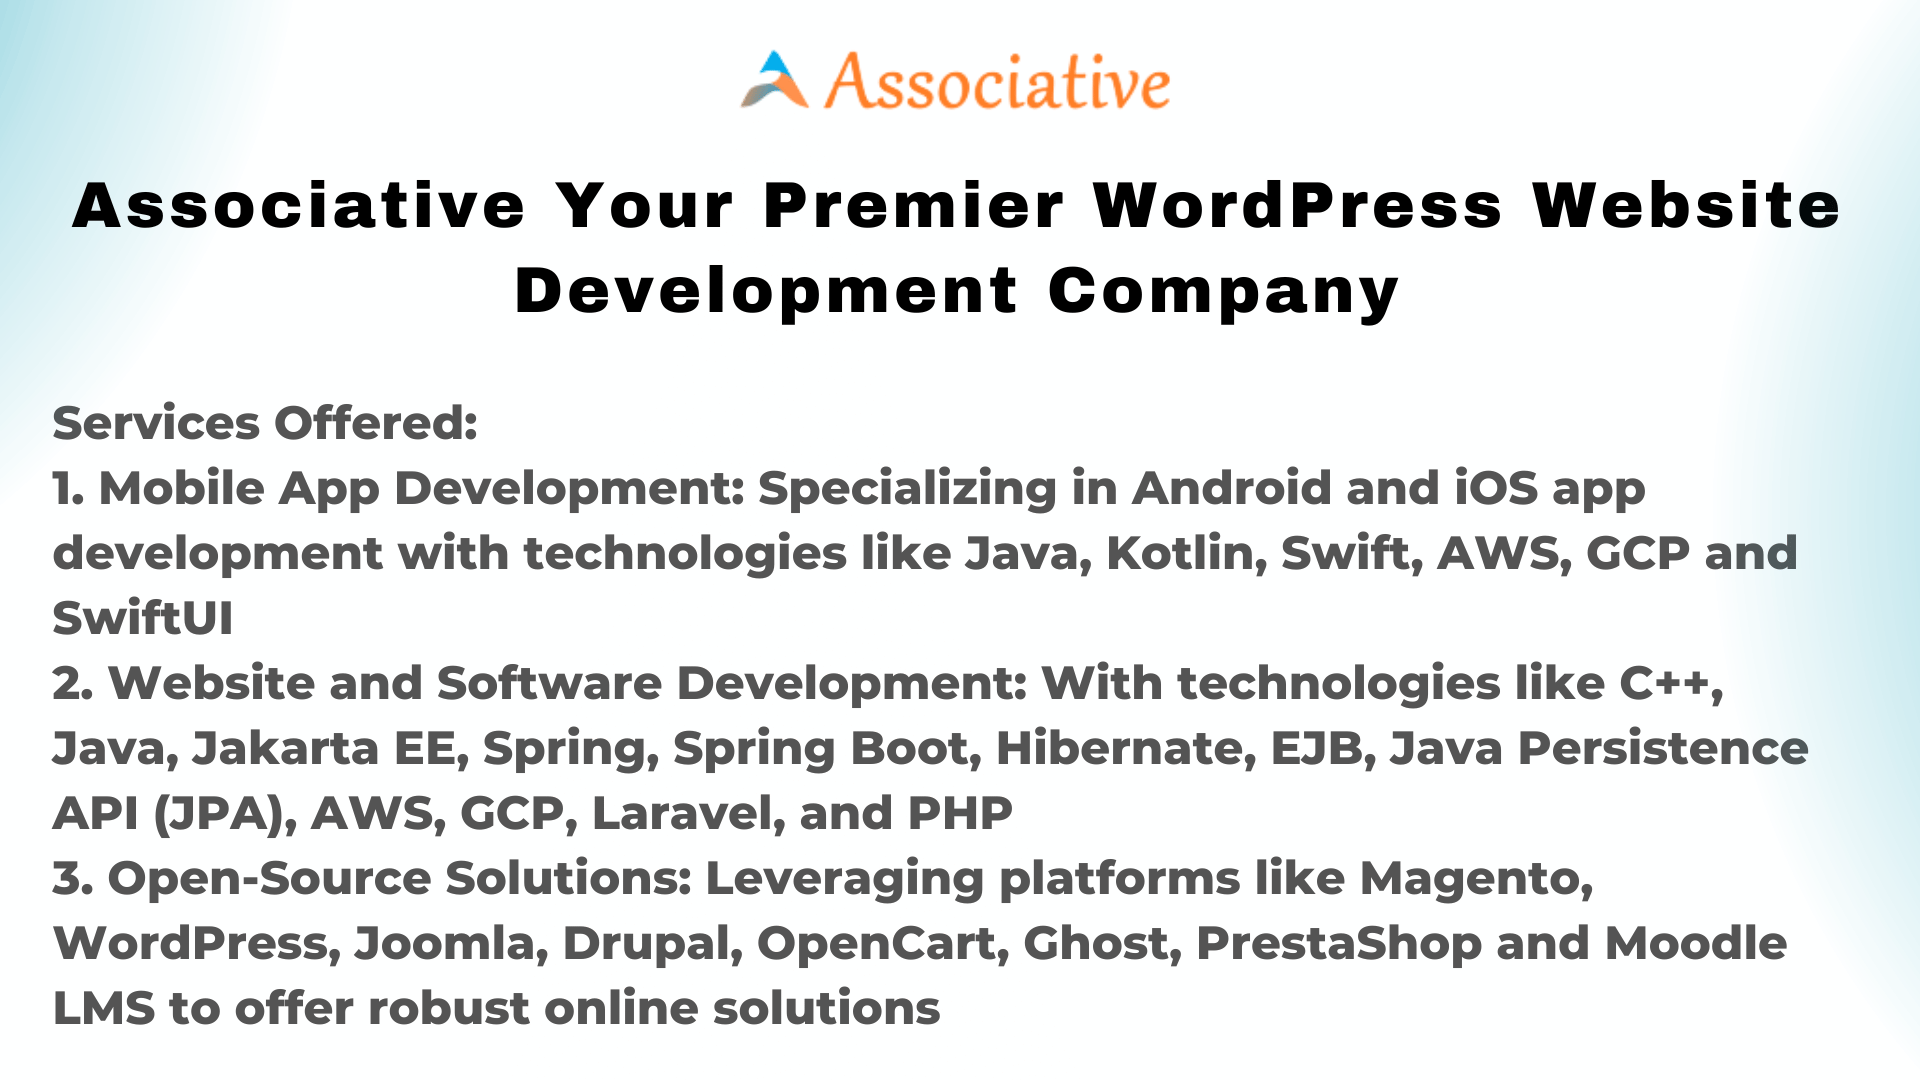 Associative Your Premier WordPress Website Development Company